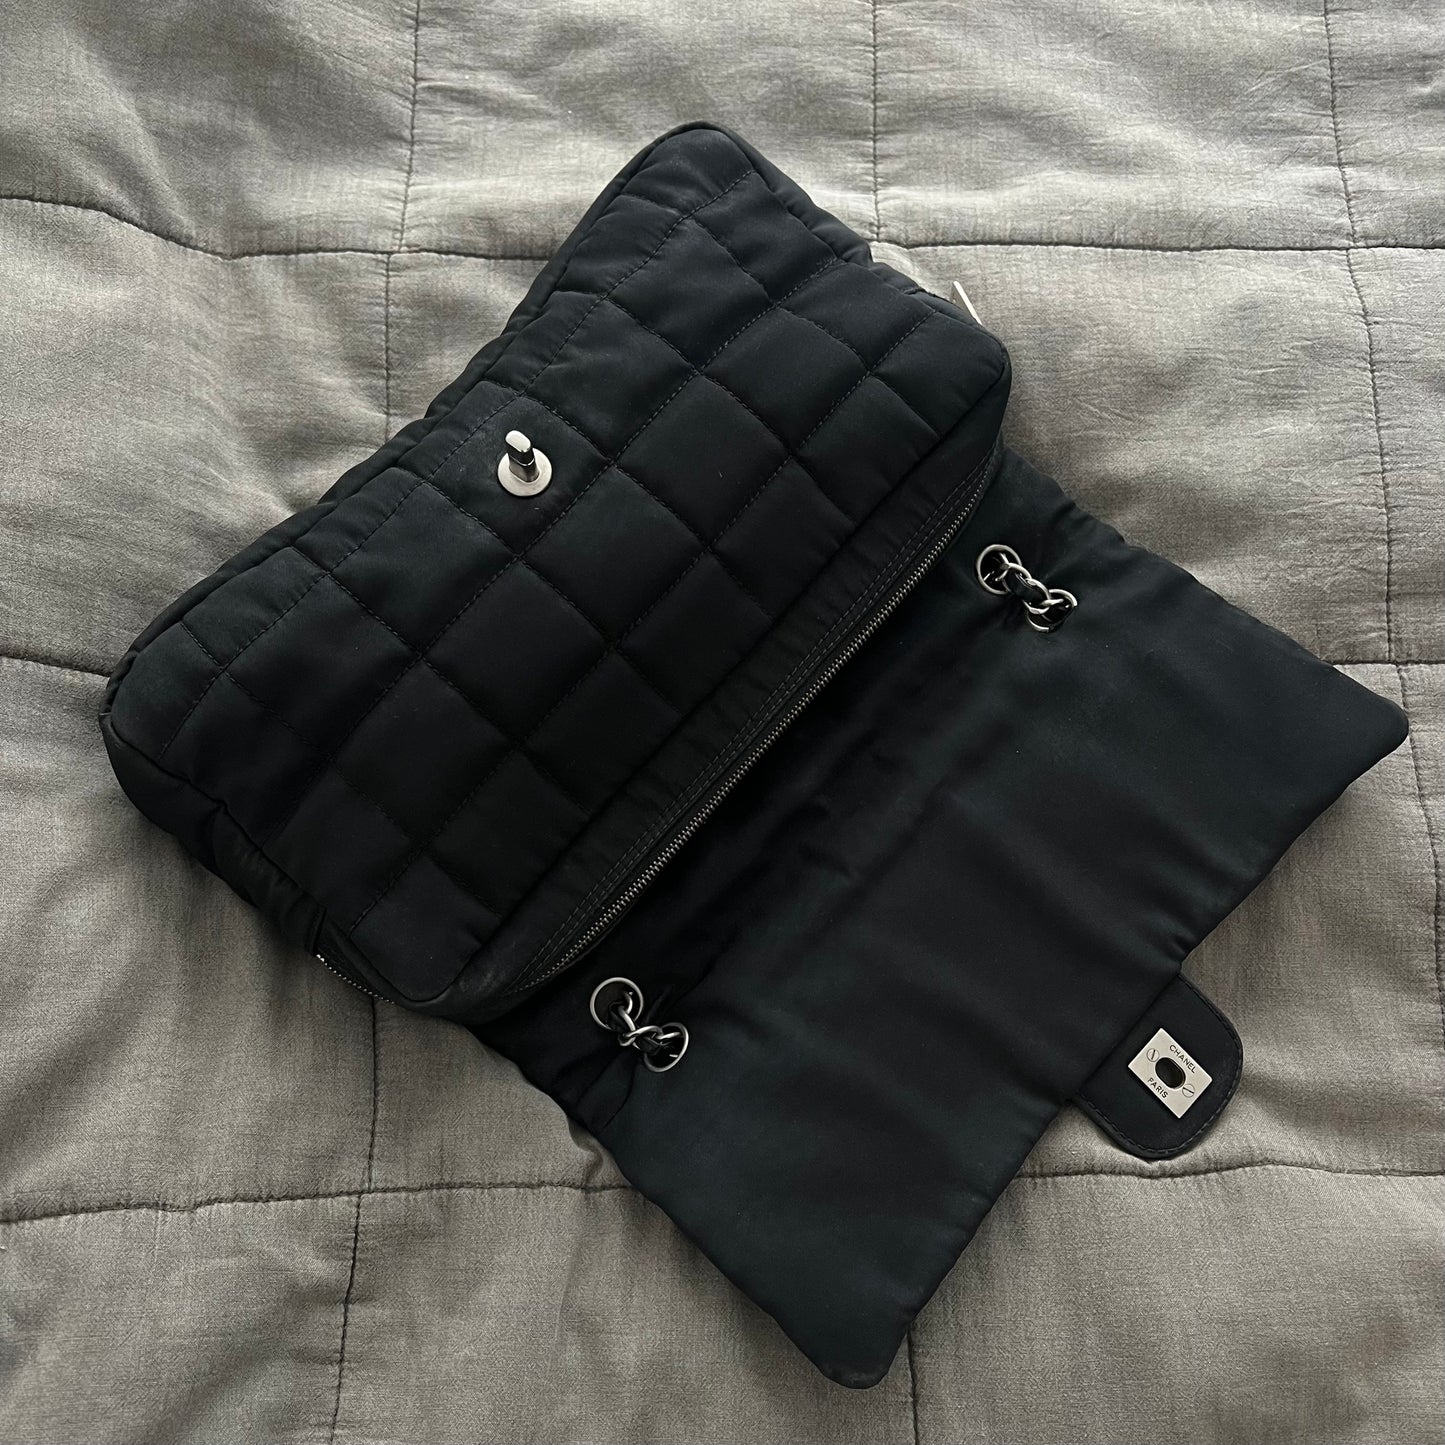 Chanel Chocolate Bar Black Nylon Bag